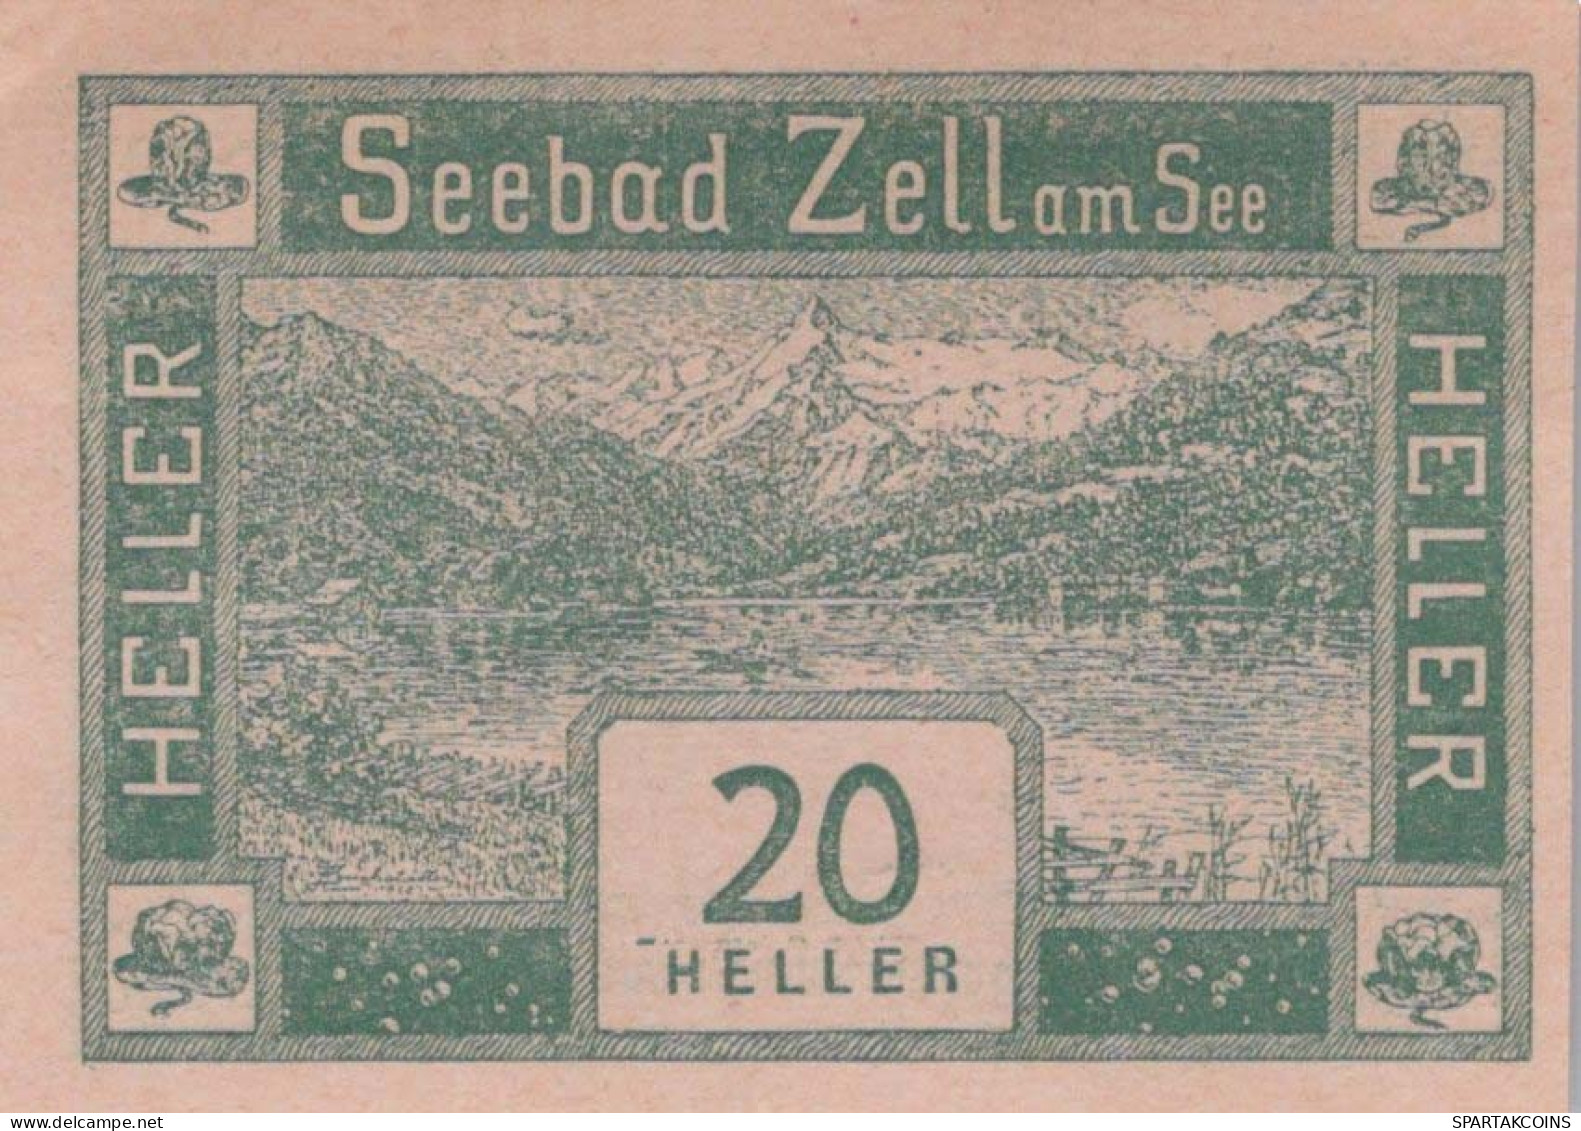 20 HELLER 1920 Stadt ZELL AM SEE Salzburg Österreich Notgeld Banknote #PE118 - [11] Lokale Uitgaven